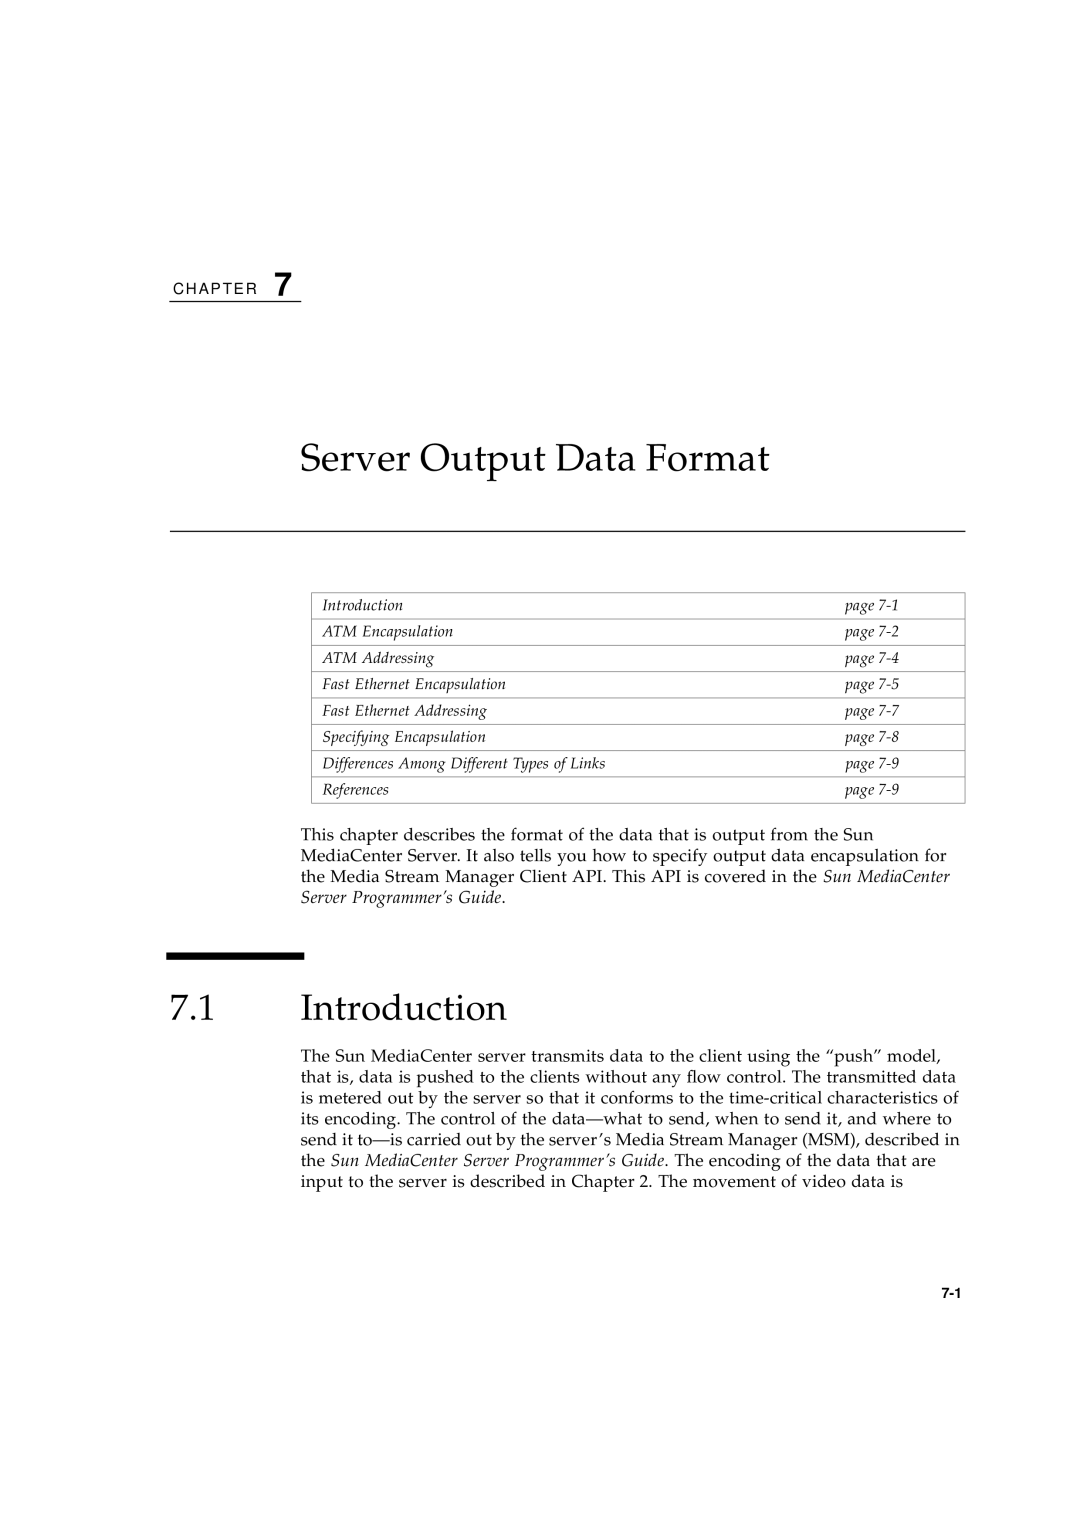 Sun Microsystems 2.1 manual Server Output Data Format, Introduction 